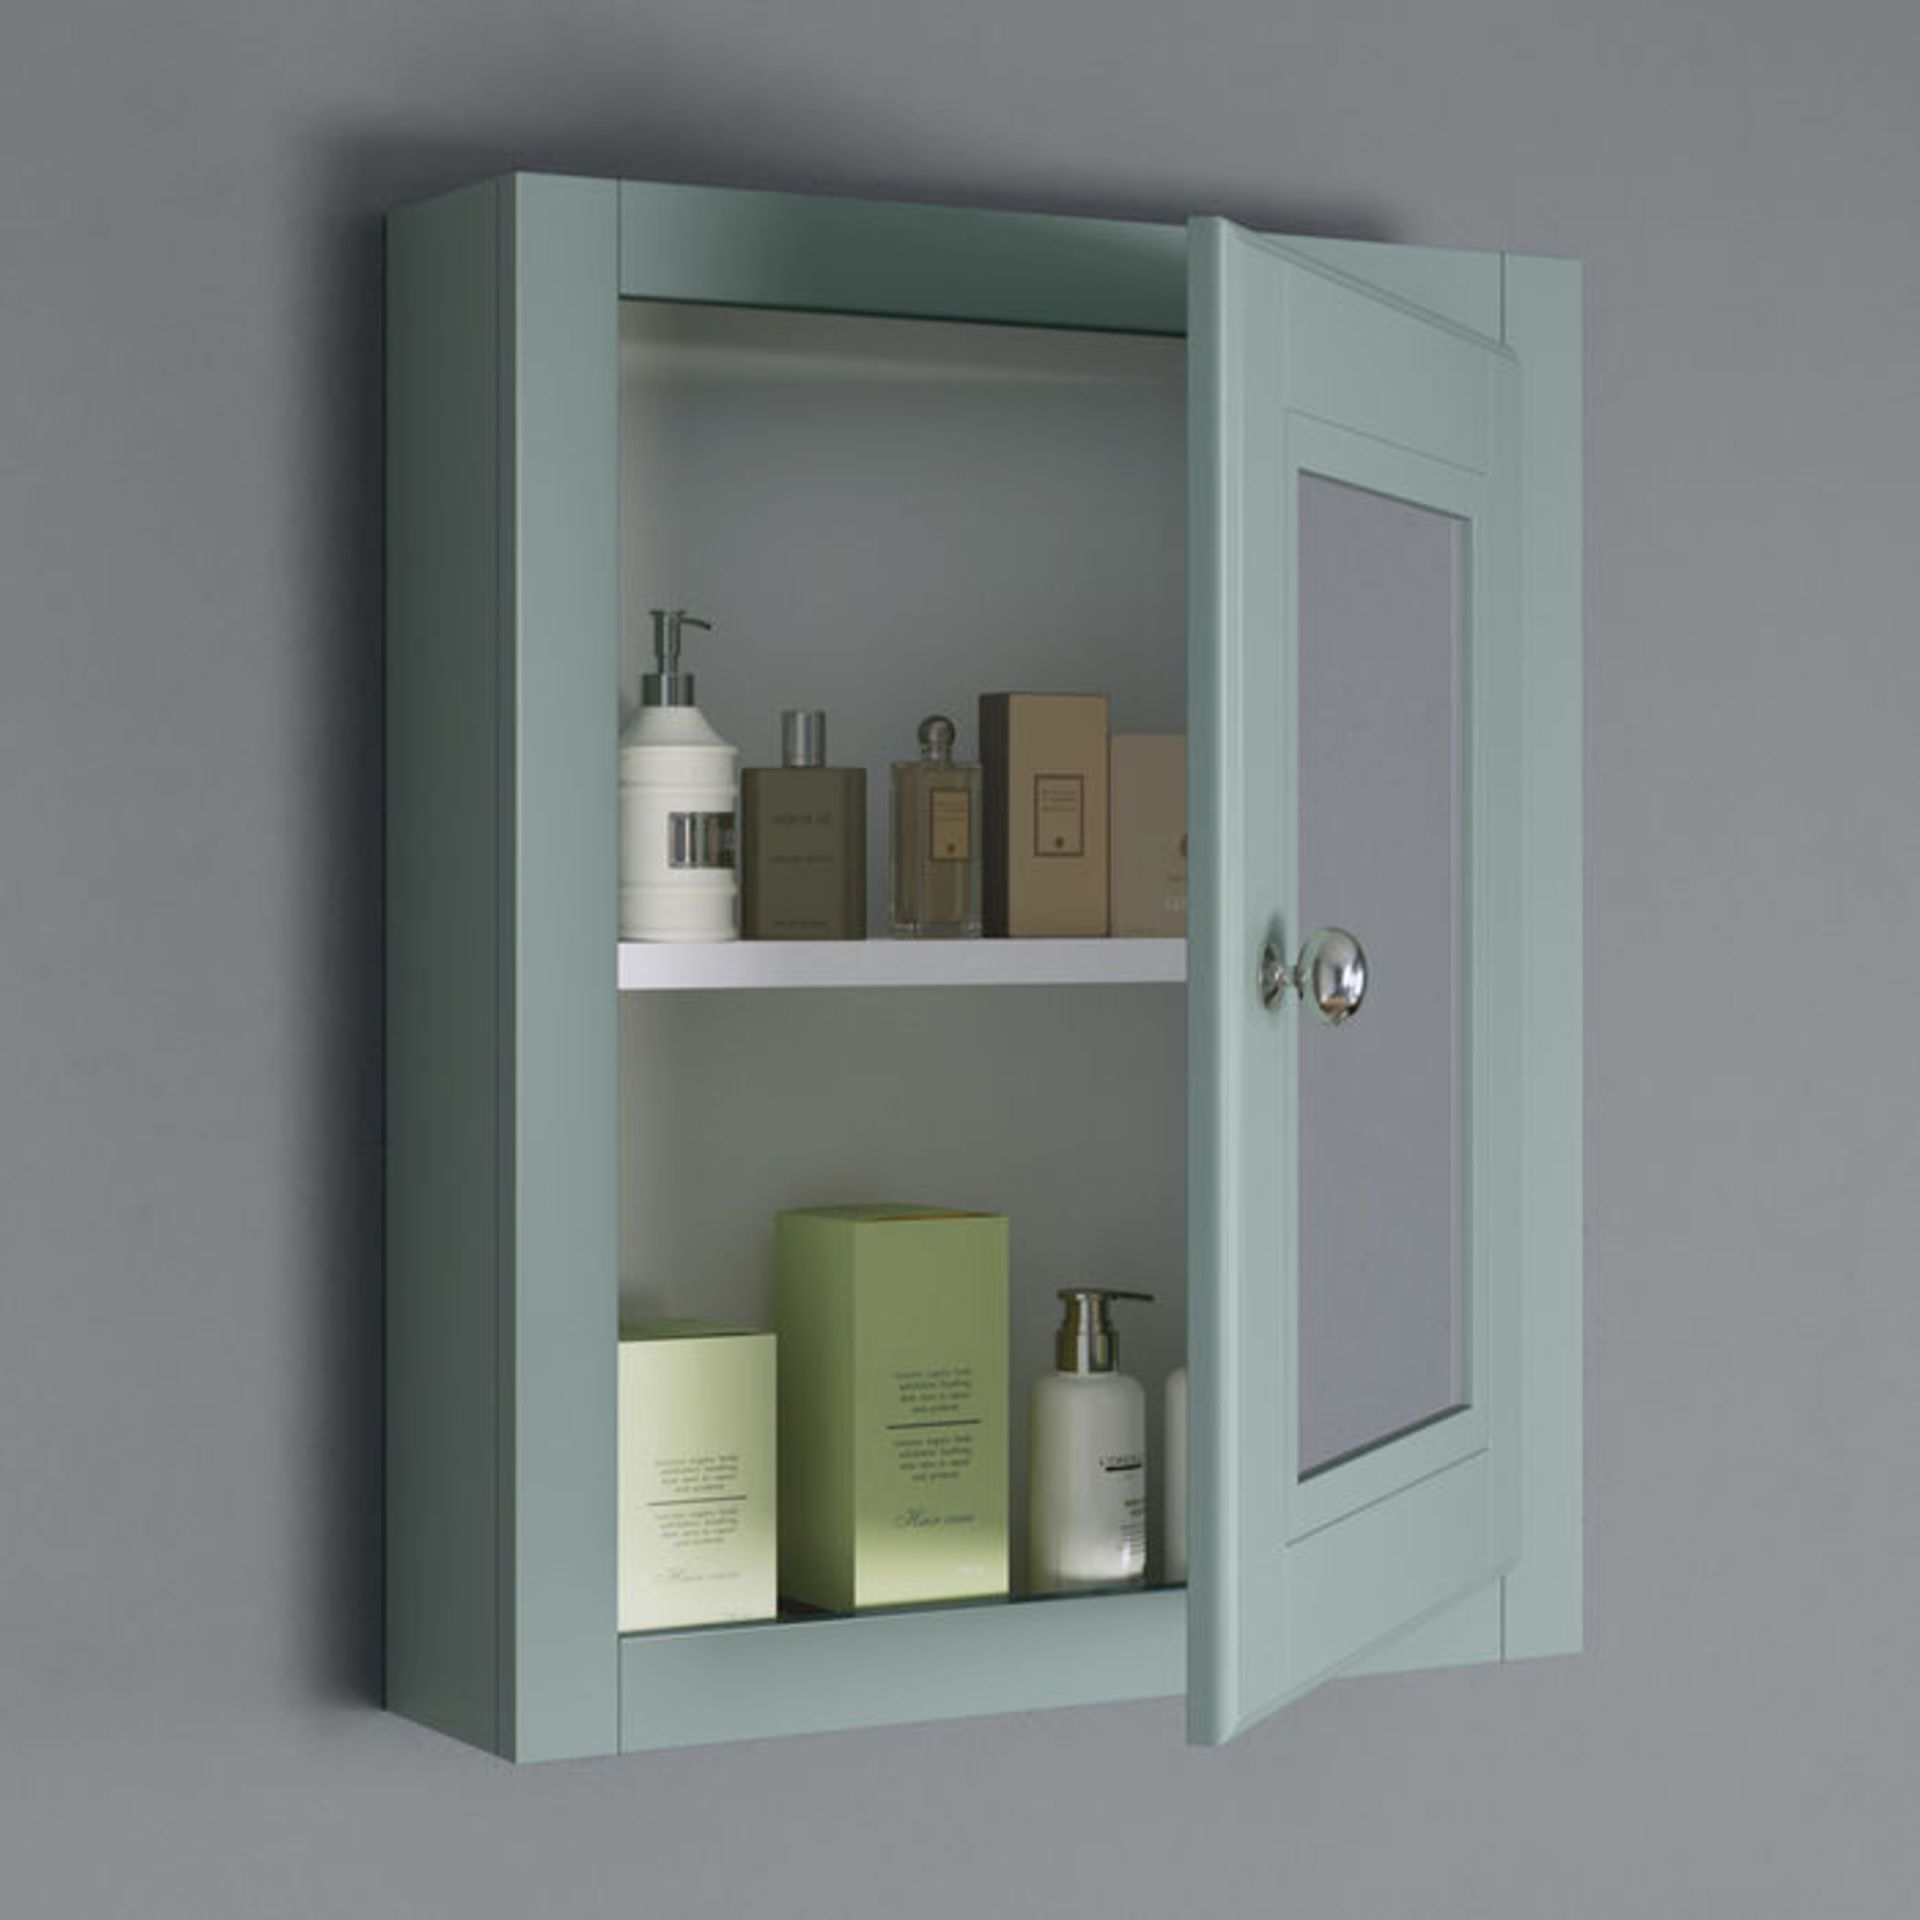 (CS208) Cambridge Single Door Mirror Cabinet - Marine Mist. RRP £199.99. Traditional aesthetic - Image 2 of 4